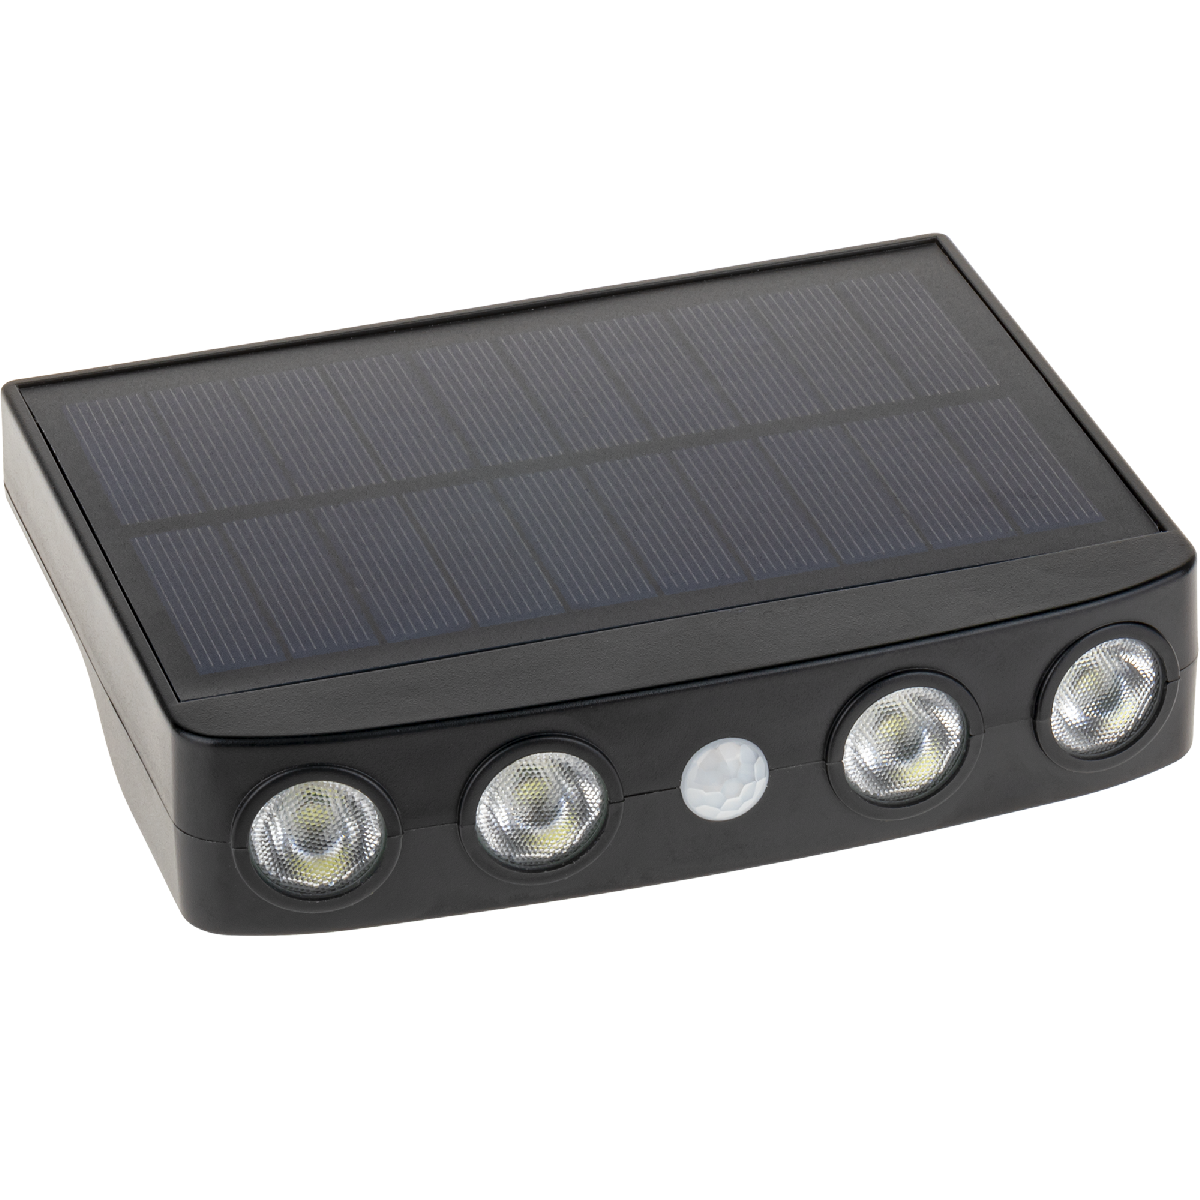 Прожектор на солнечных батареях Duwi Solar led 25027 2